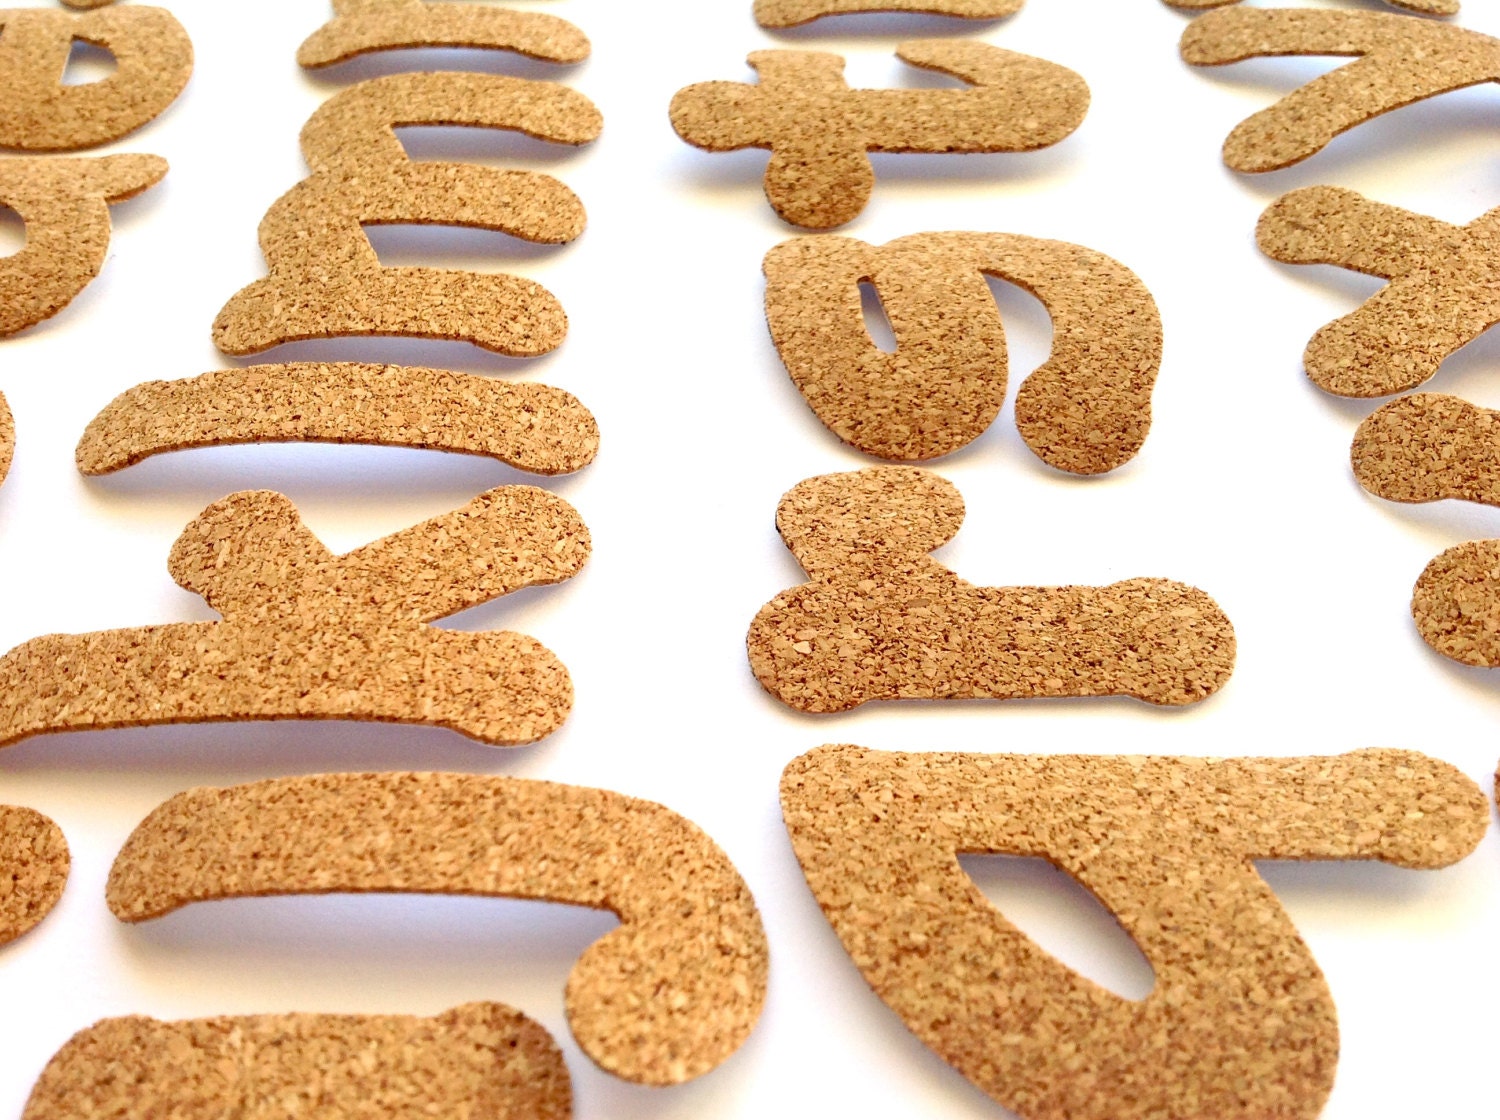 Alphabet Stickers, Alphabet Letter Sets, Self-adhesive Cork Die